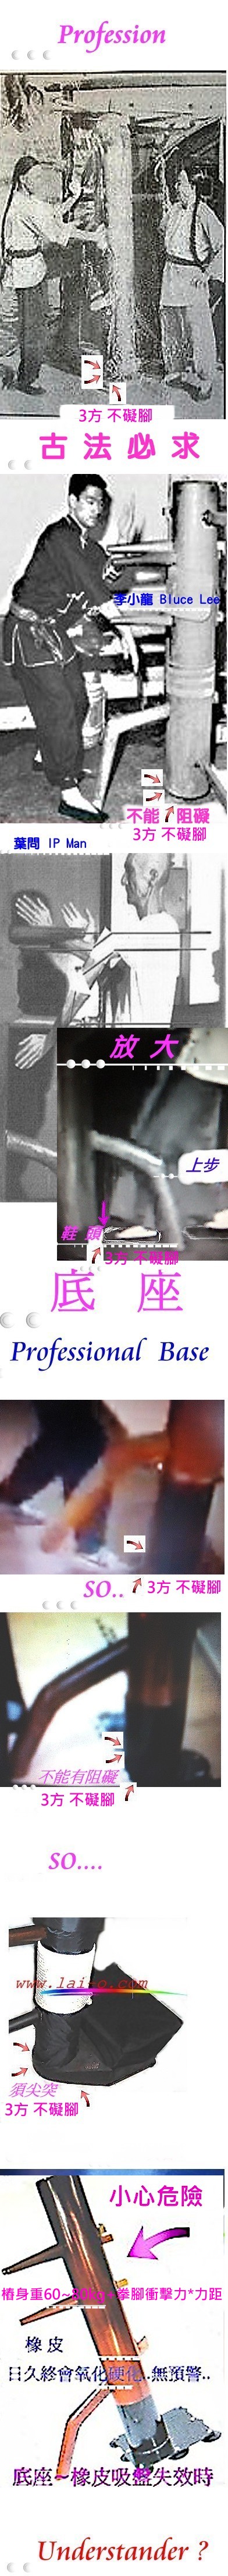 base-profession.jpg